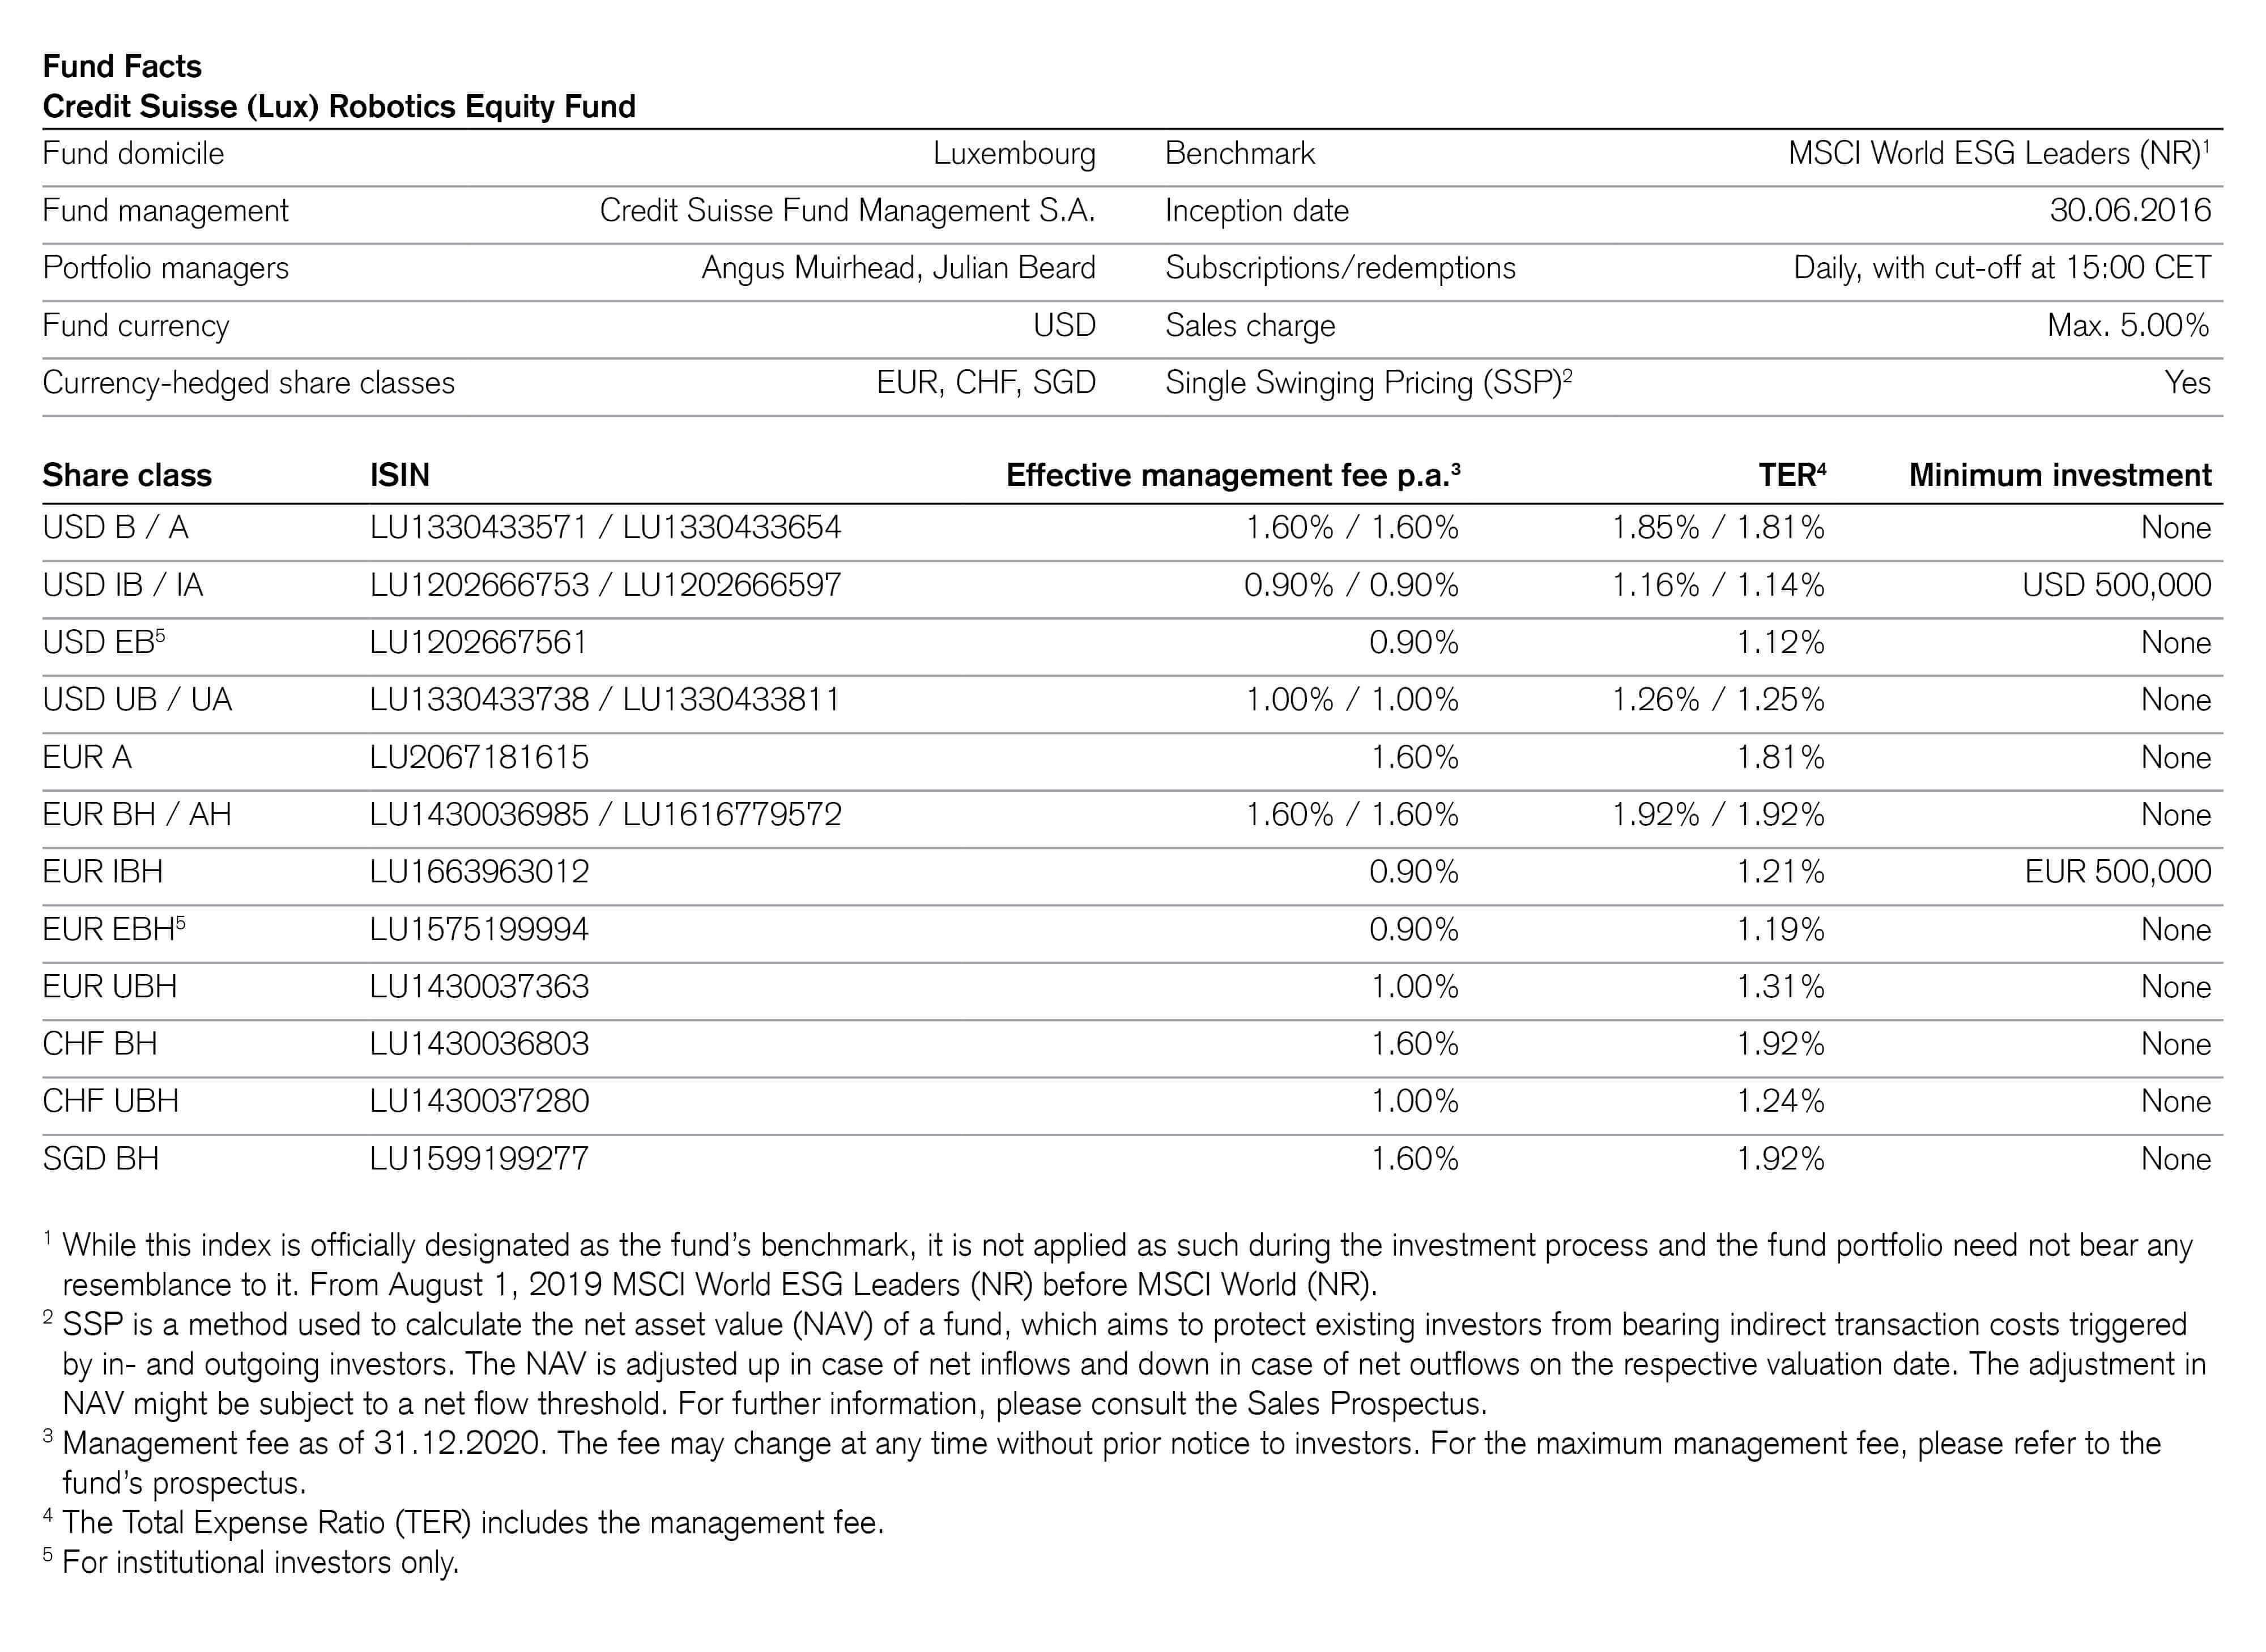 Fund Facts Credit Suisse (Lux) Robotics Equity Fund